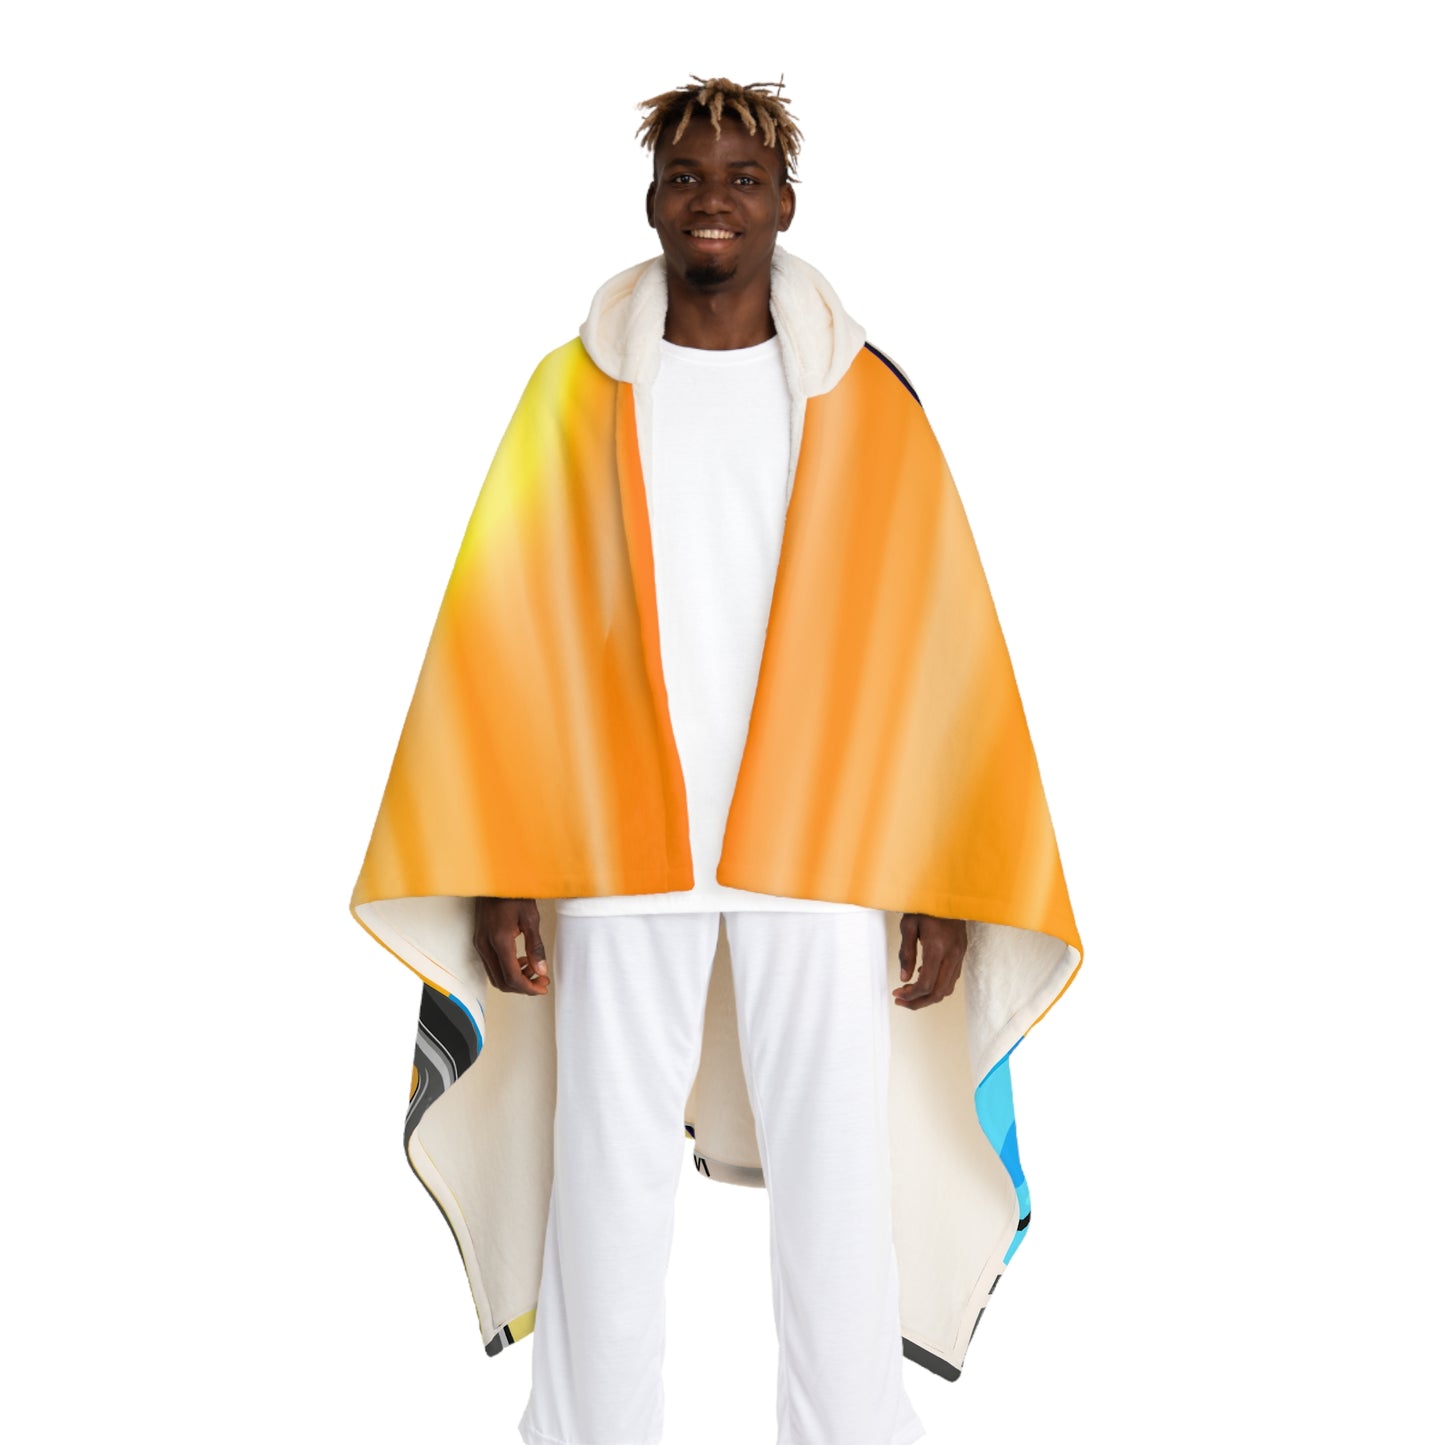 Lorenzo the Llama Hooded Blanket